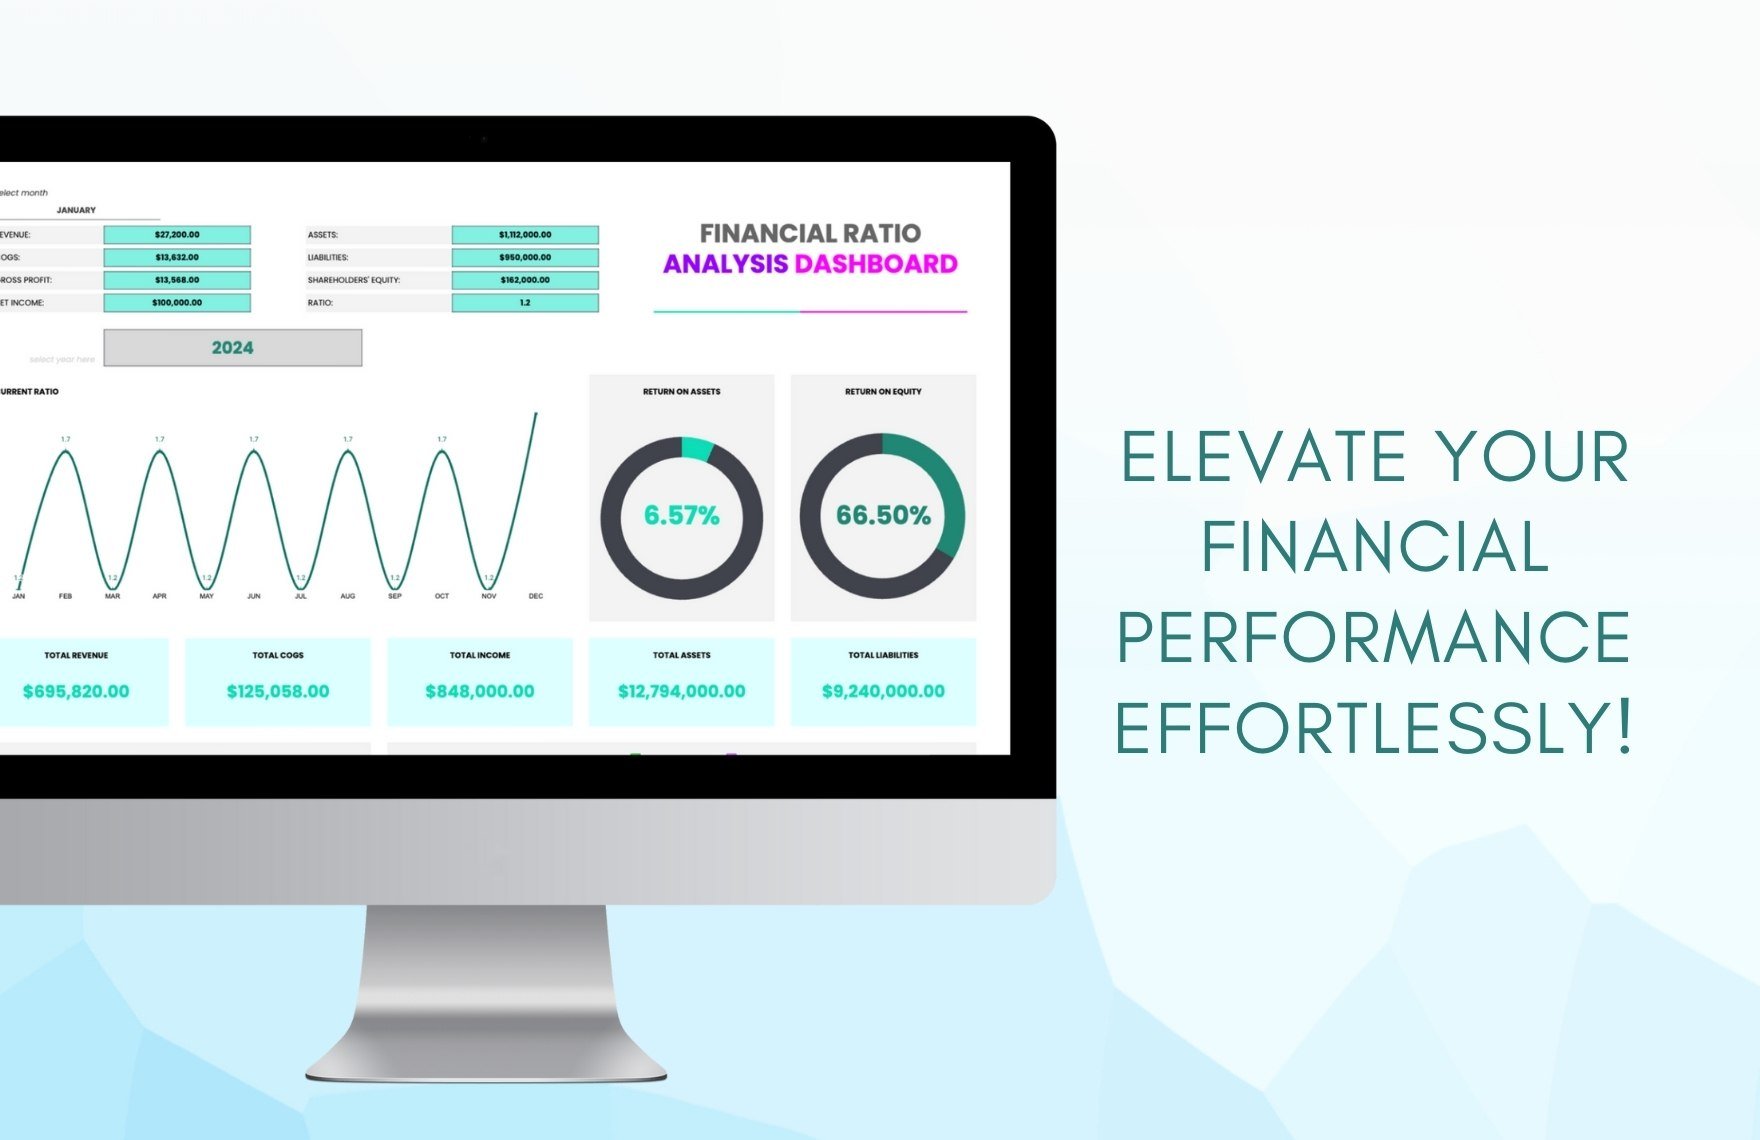 Financial Ratio Analysis Dashboard Template